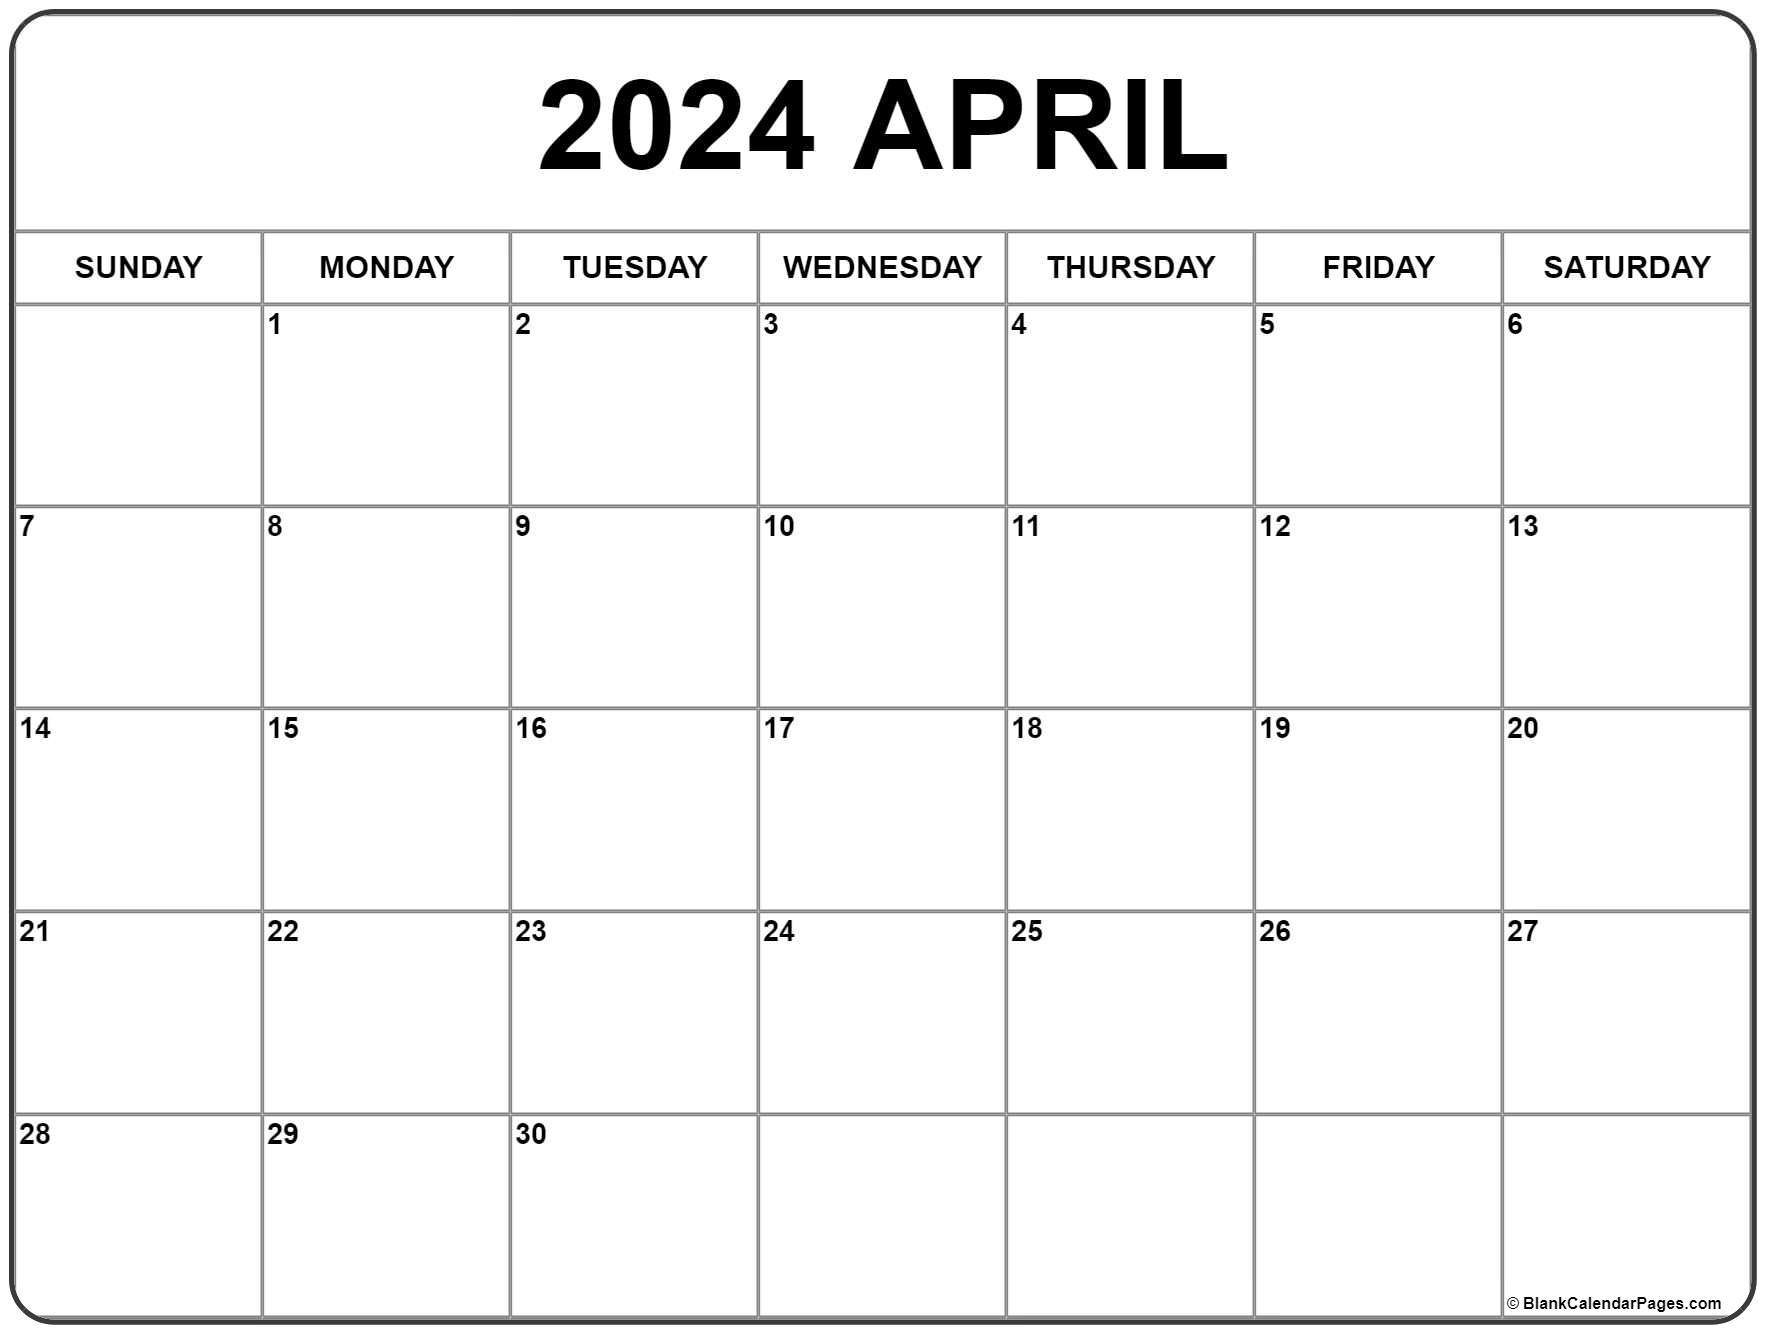 April 2022 Calendar Printable,123 University Calendar 2022